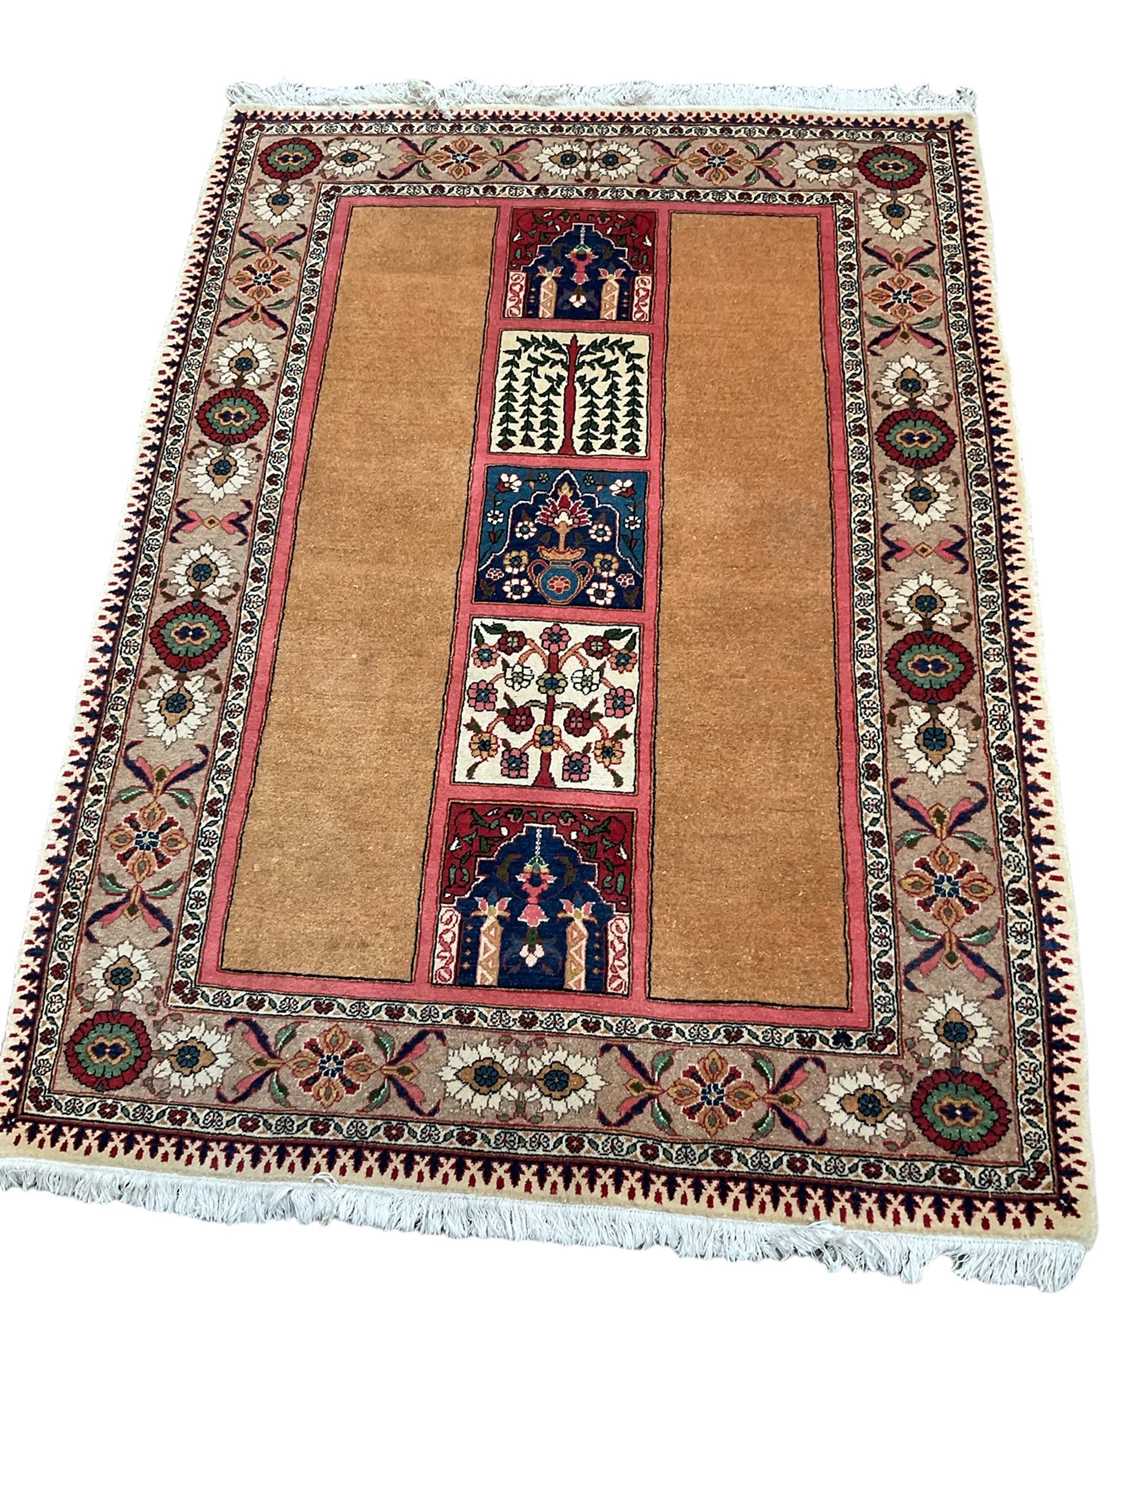 Lot 1297 - Iranian nomadic tribal design rug, in vegetable dye colours